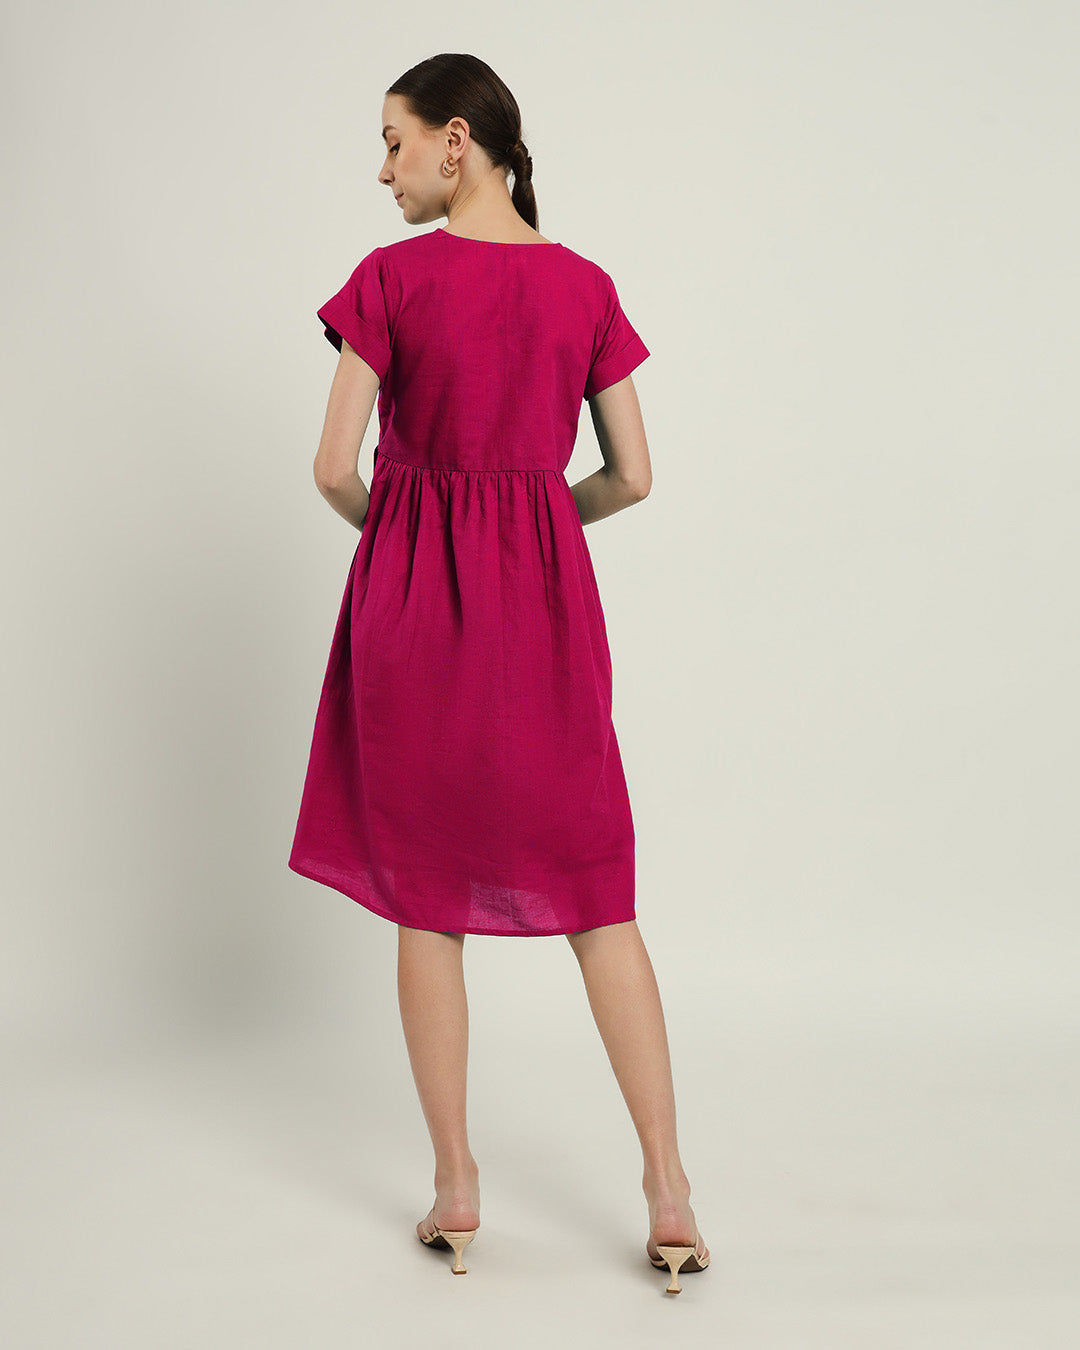 The Valence Berry Cotton Dress